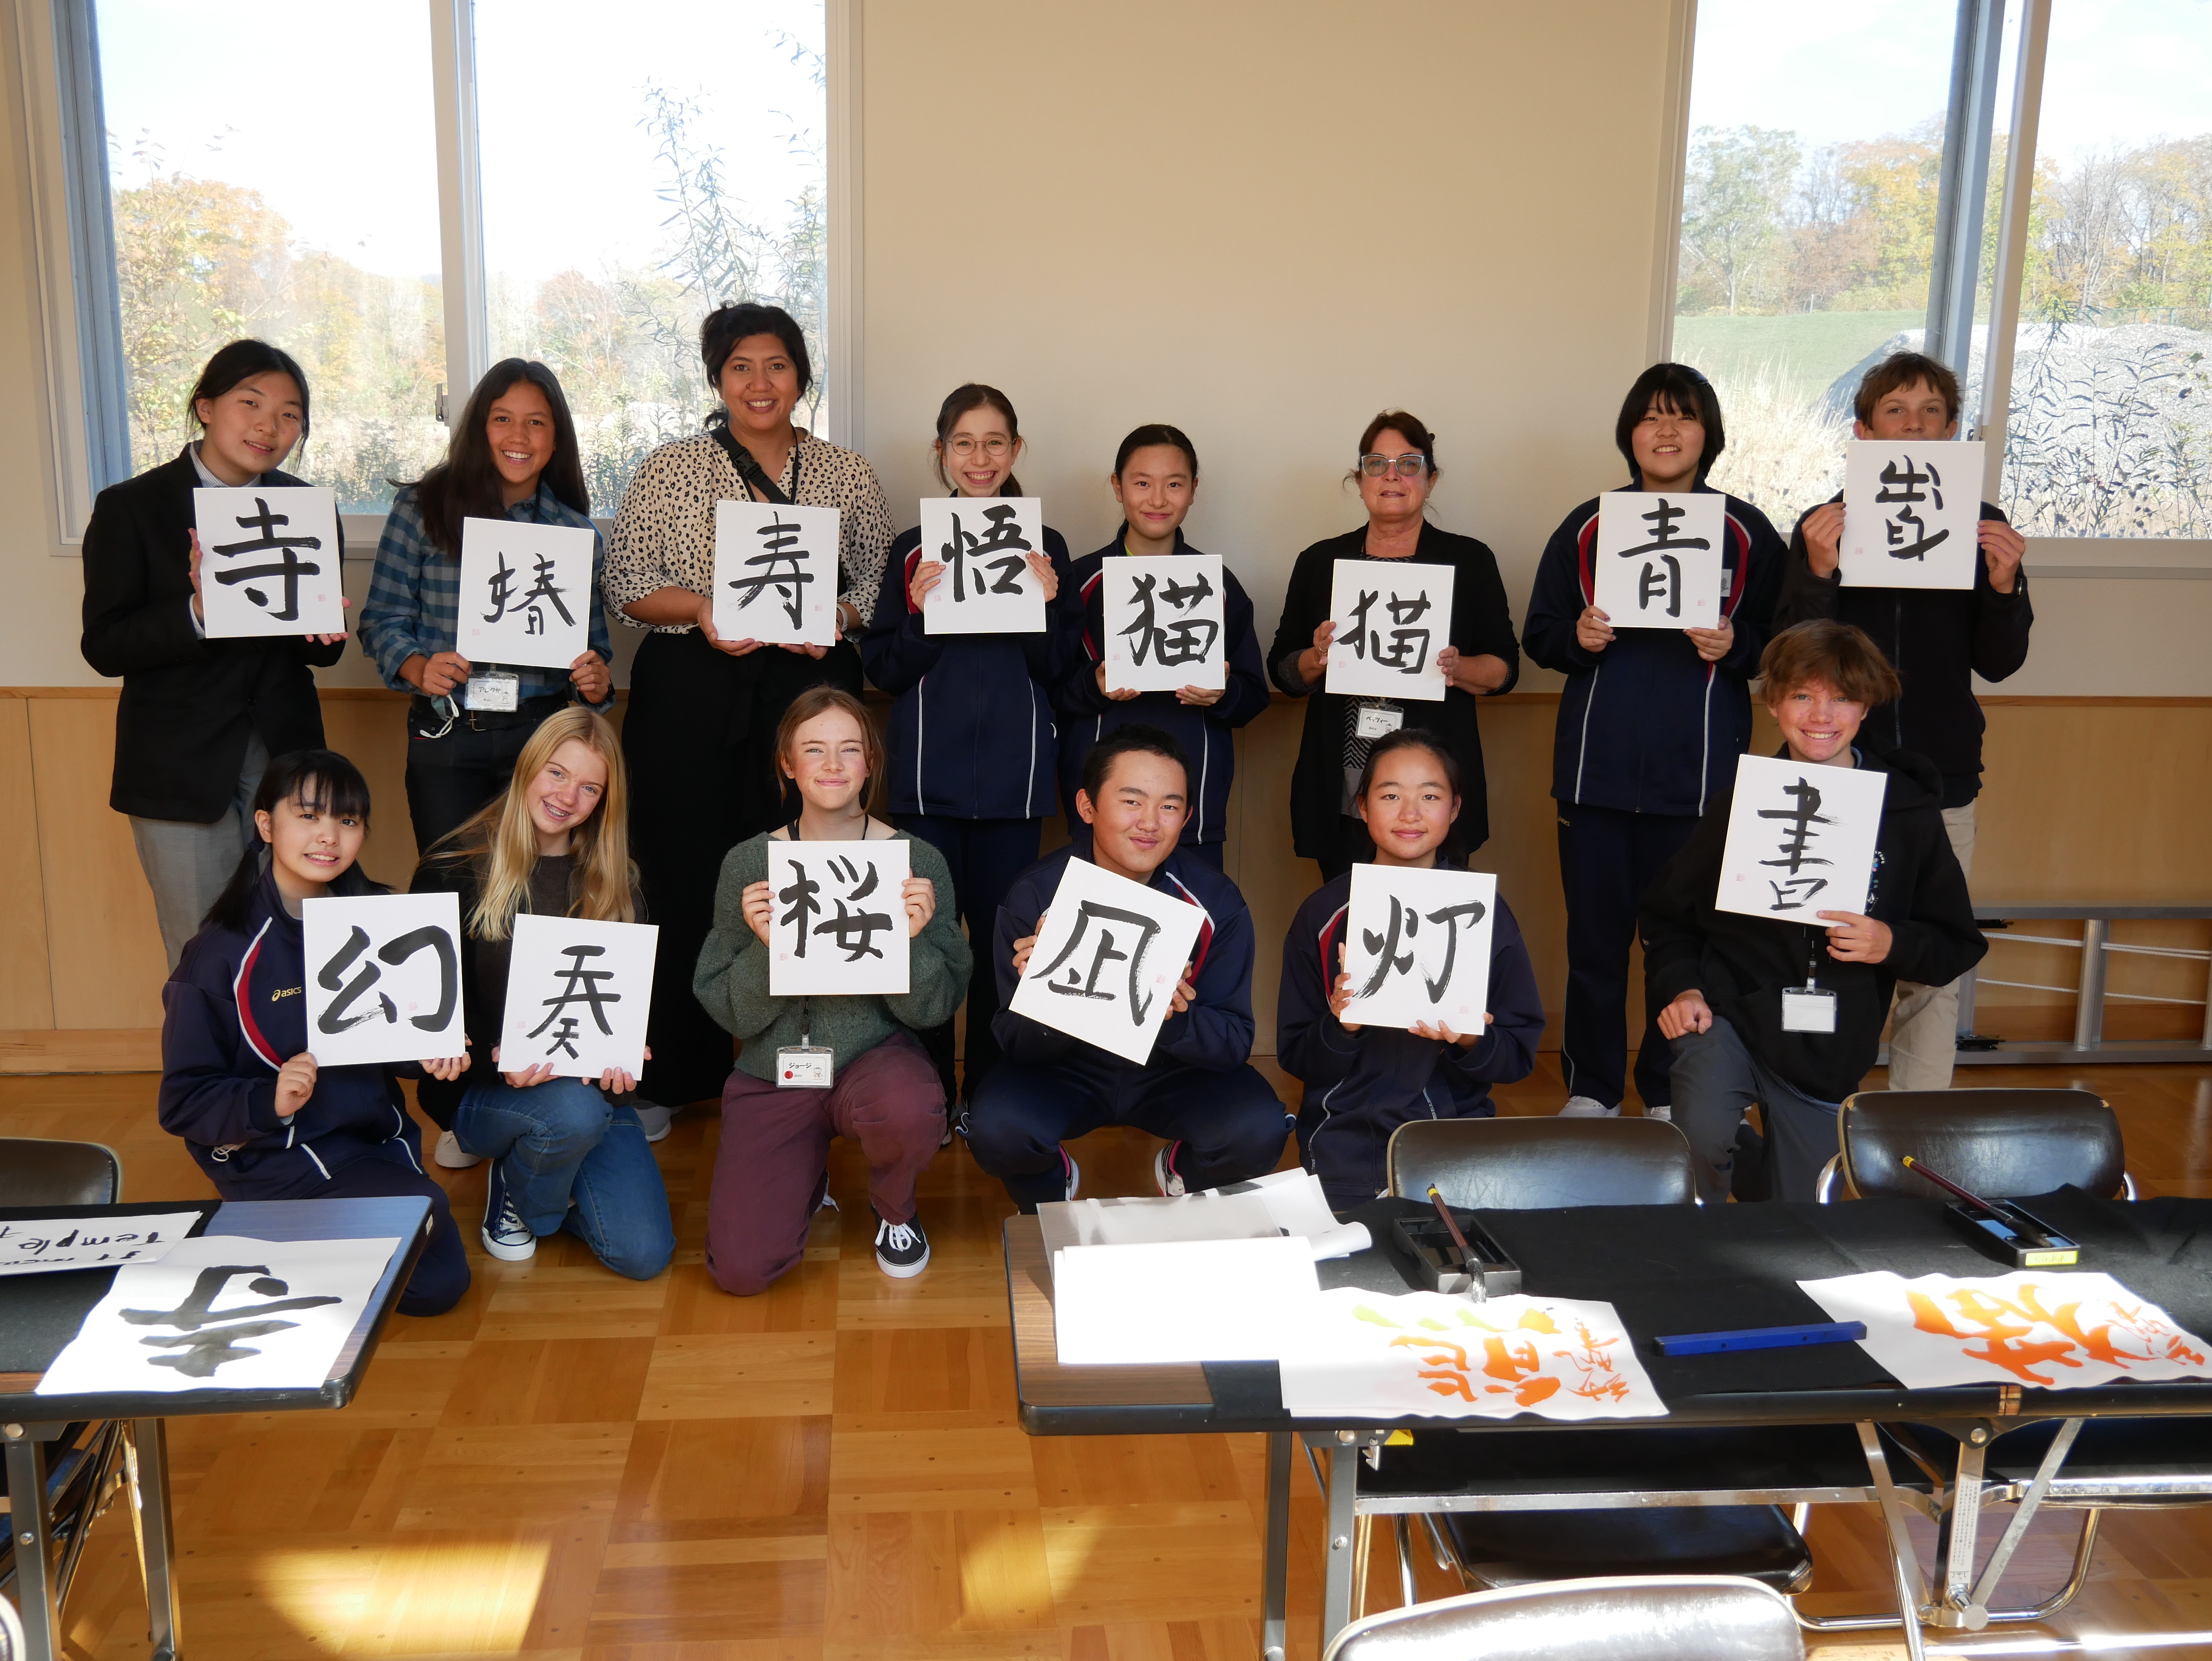 TIMBAH BELL: ASPEN 8TH GRADE EXCHANGE IN SHIMUKAPPU, JAPAN